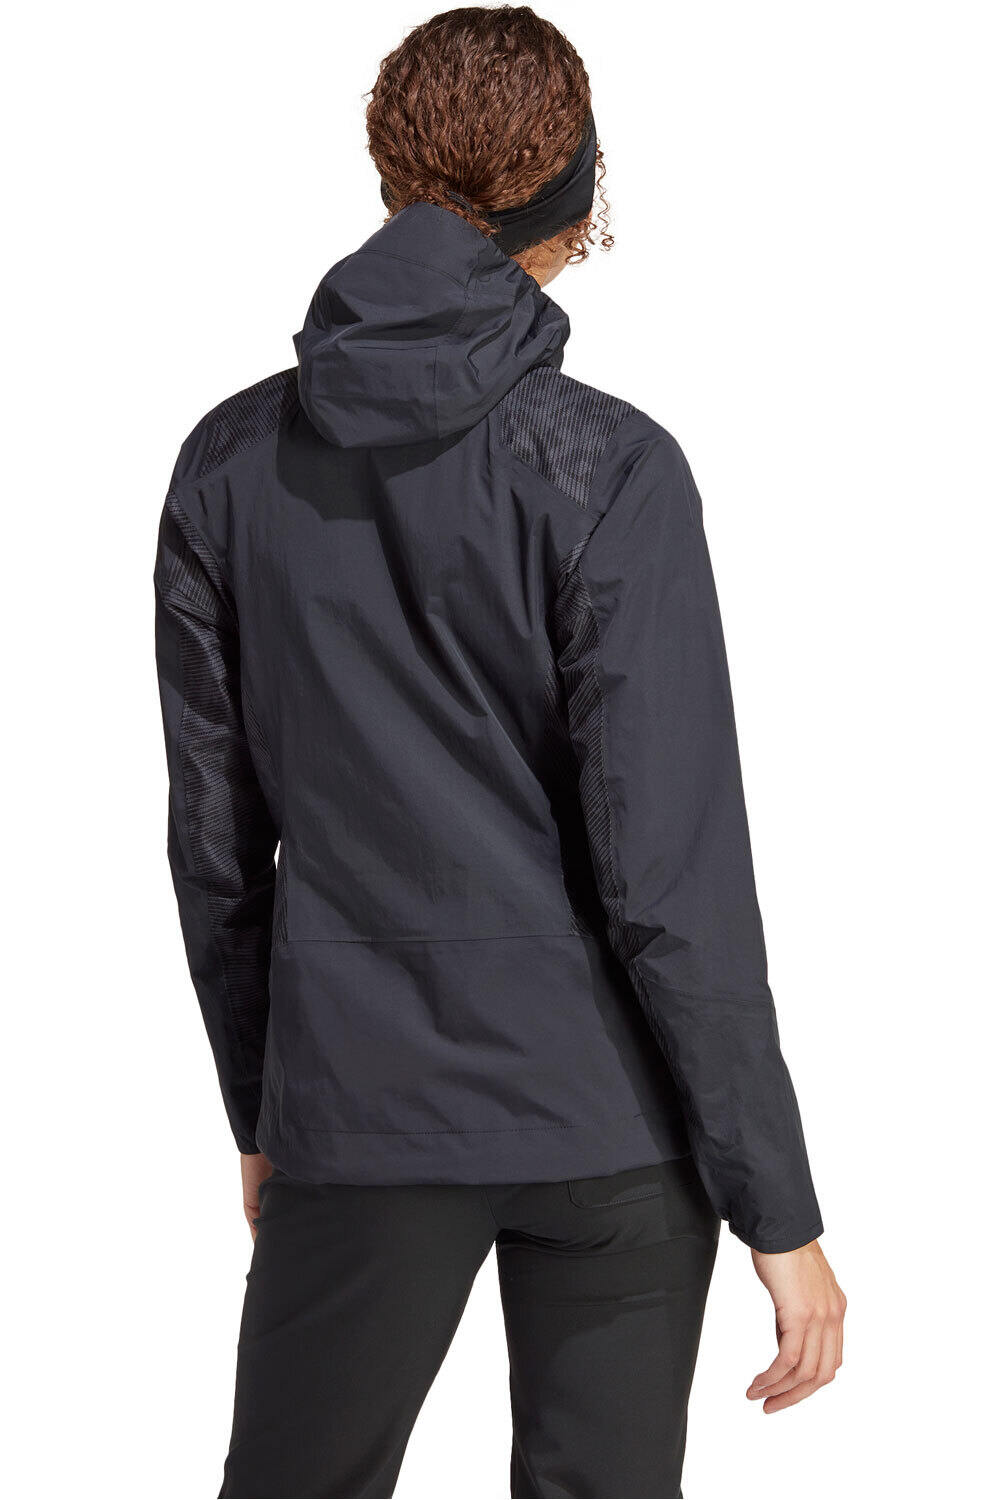 adidas chaqueta impermeable mujer Terrex Xperior Hybrid Rain vista trasera